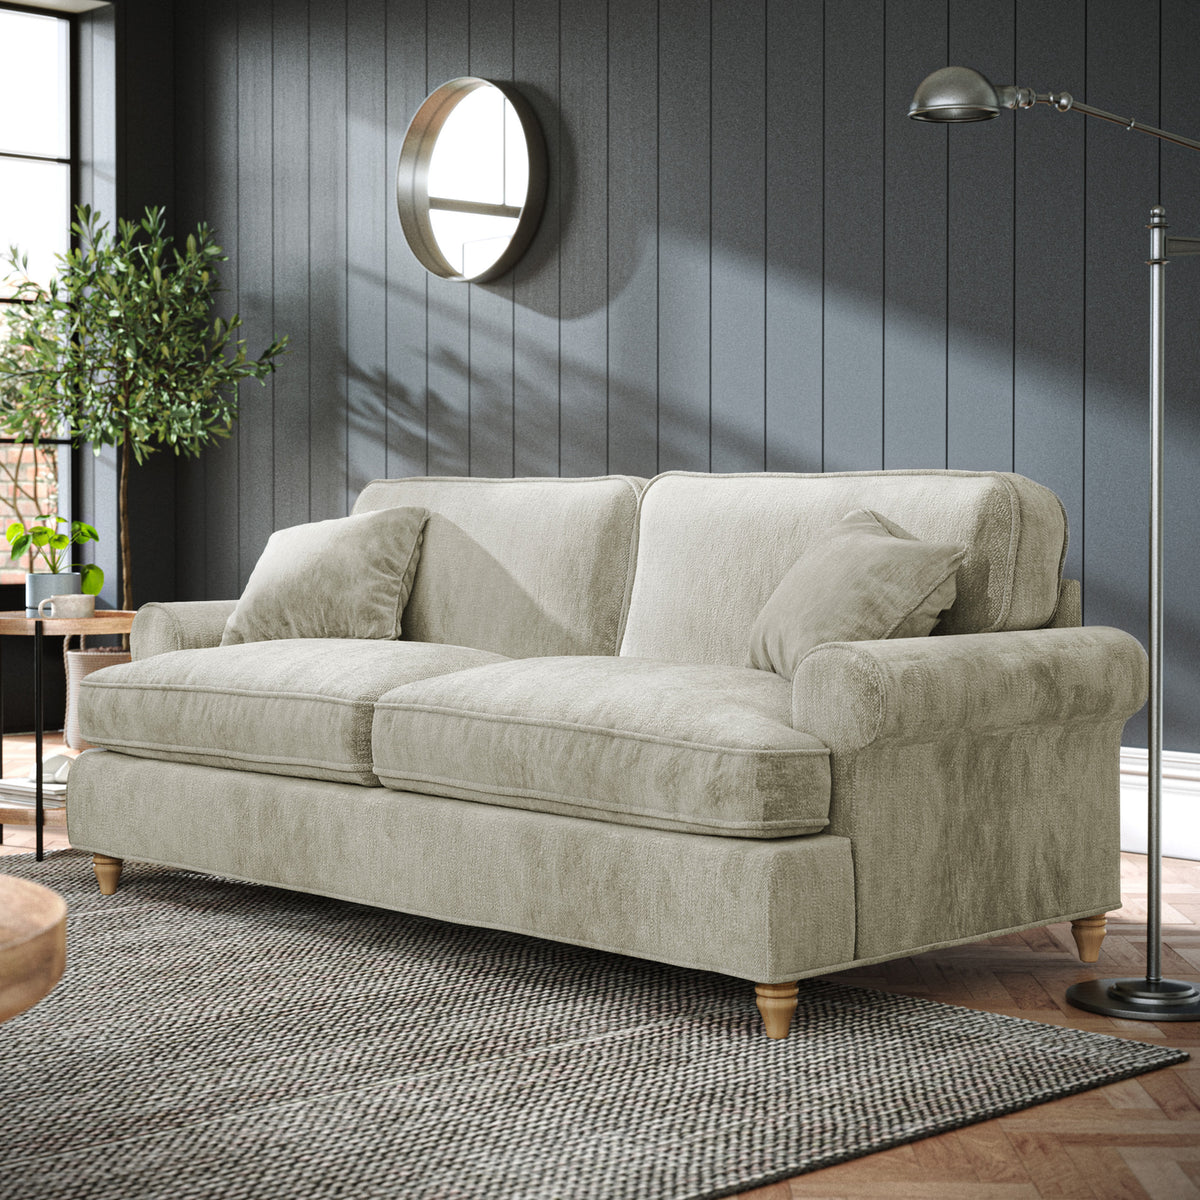 Alfie Mink 3 Seater Sofa from Roseland Furniture